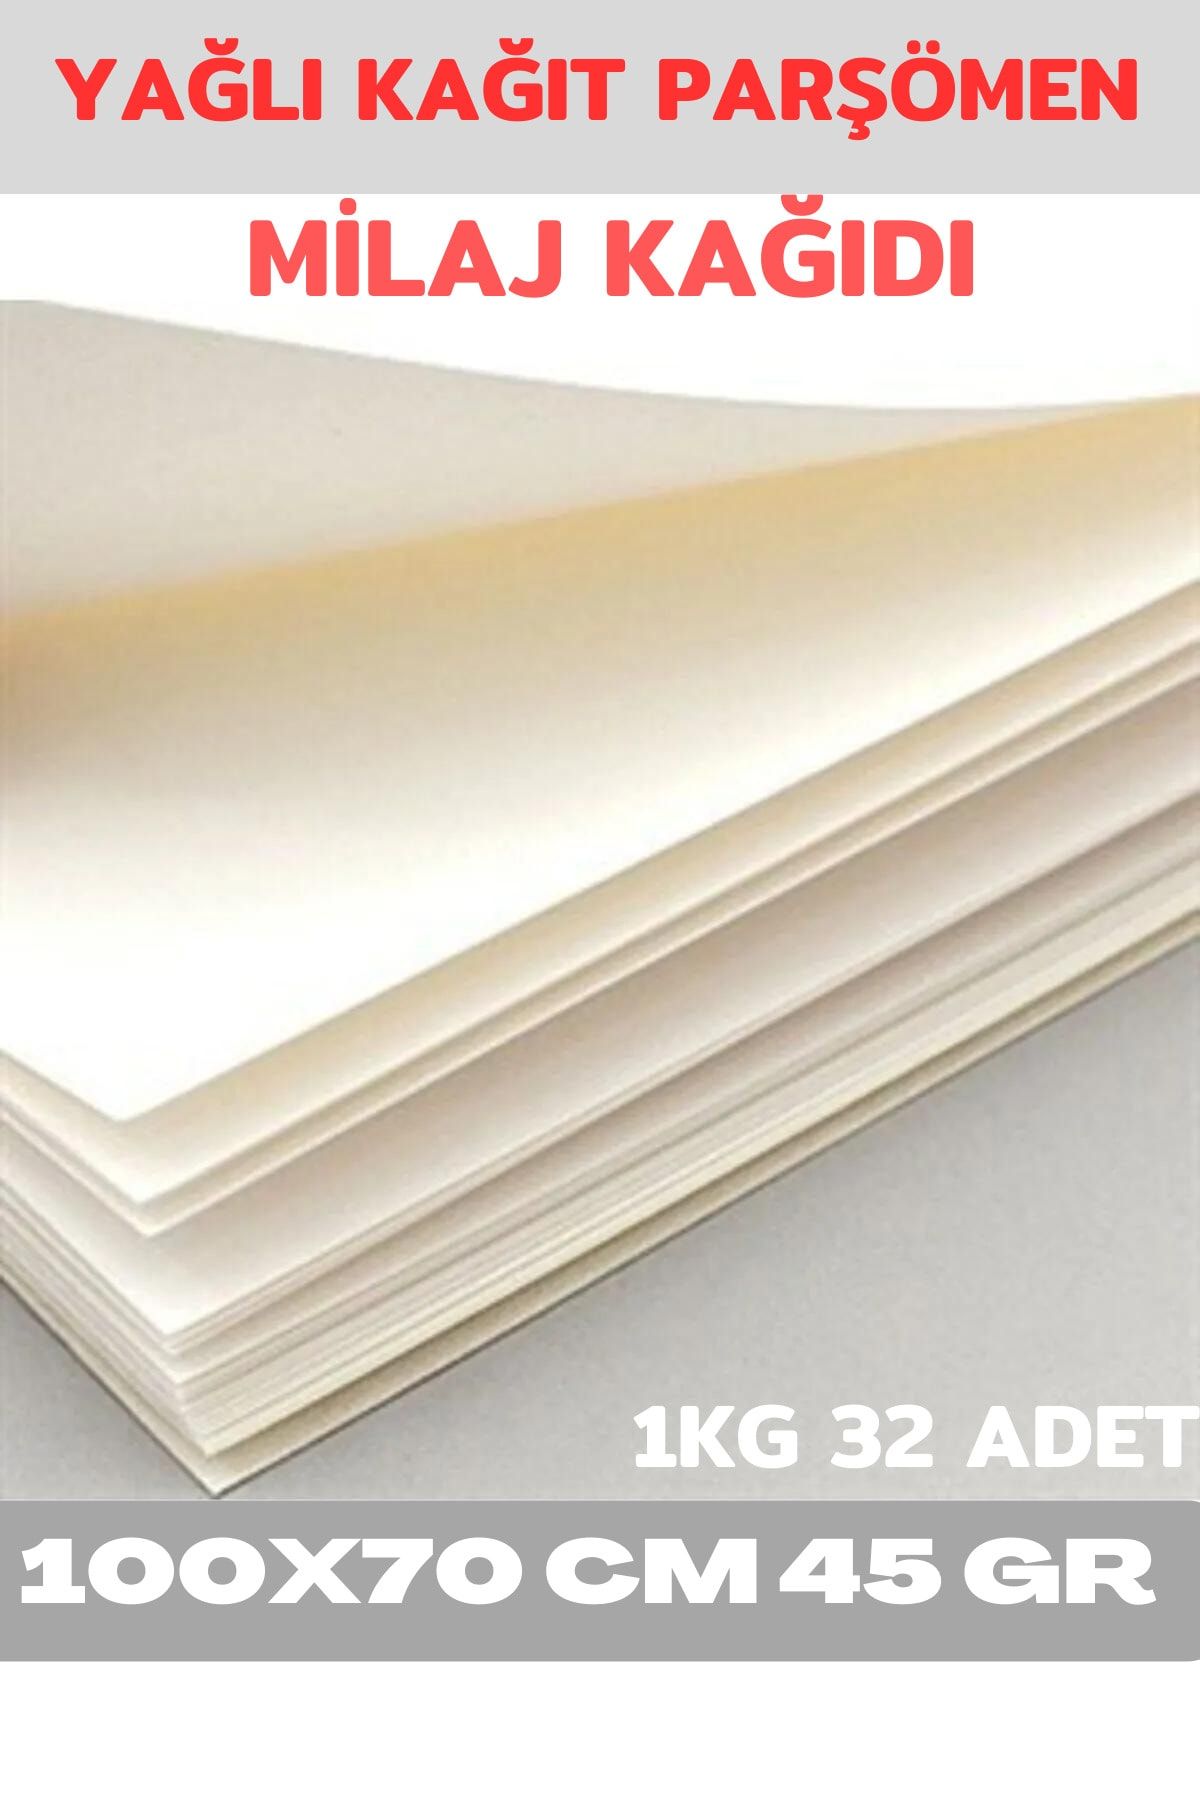 OBRAX 1kg 32 Adet (32 Adet) Yağlı Kağıt Parşömen/milaj Kağıdı 100x70 Cm 45 Gr